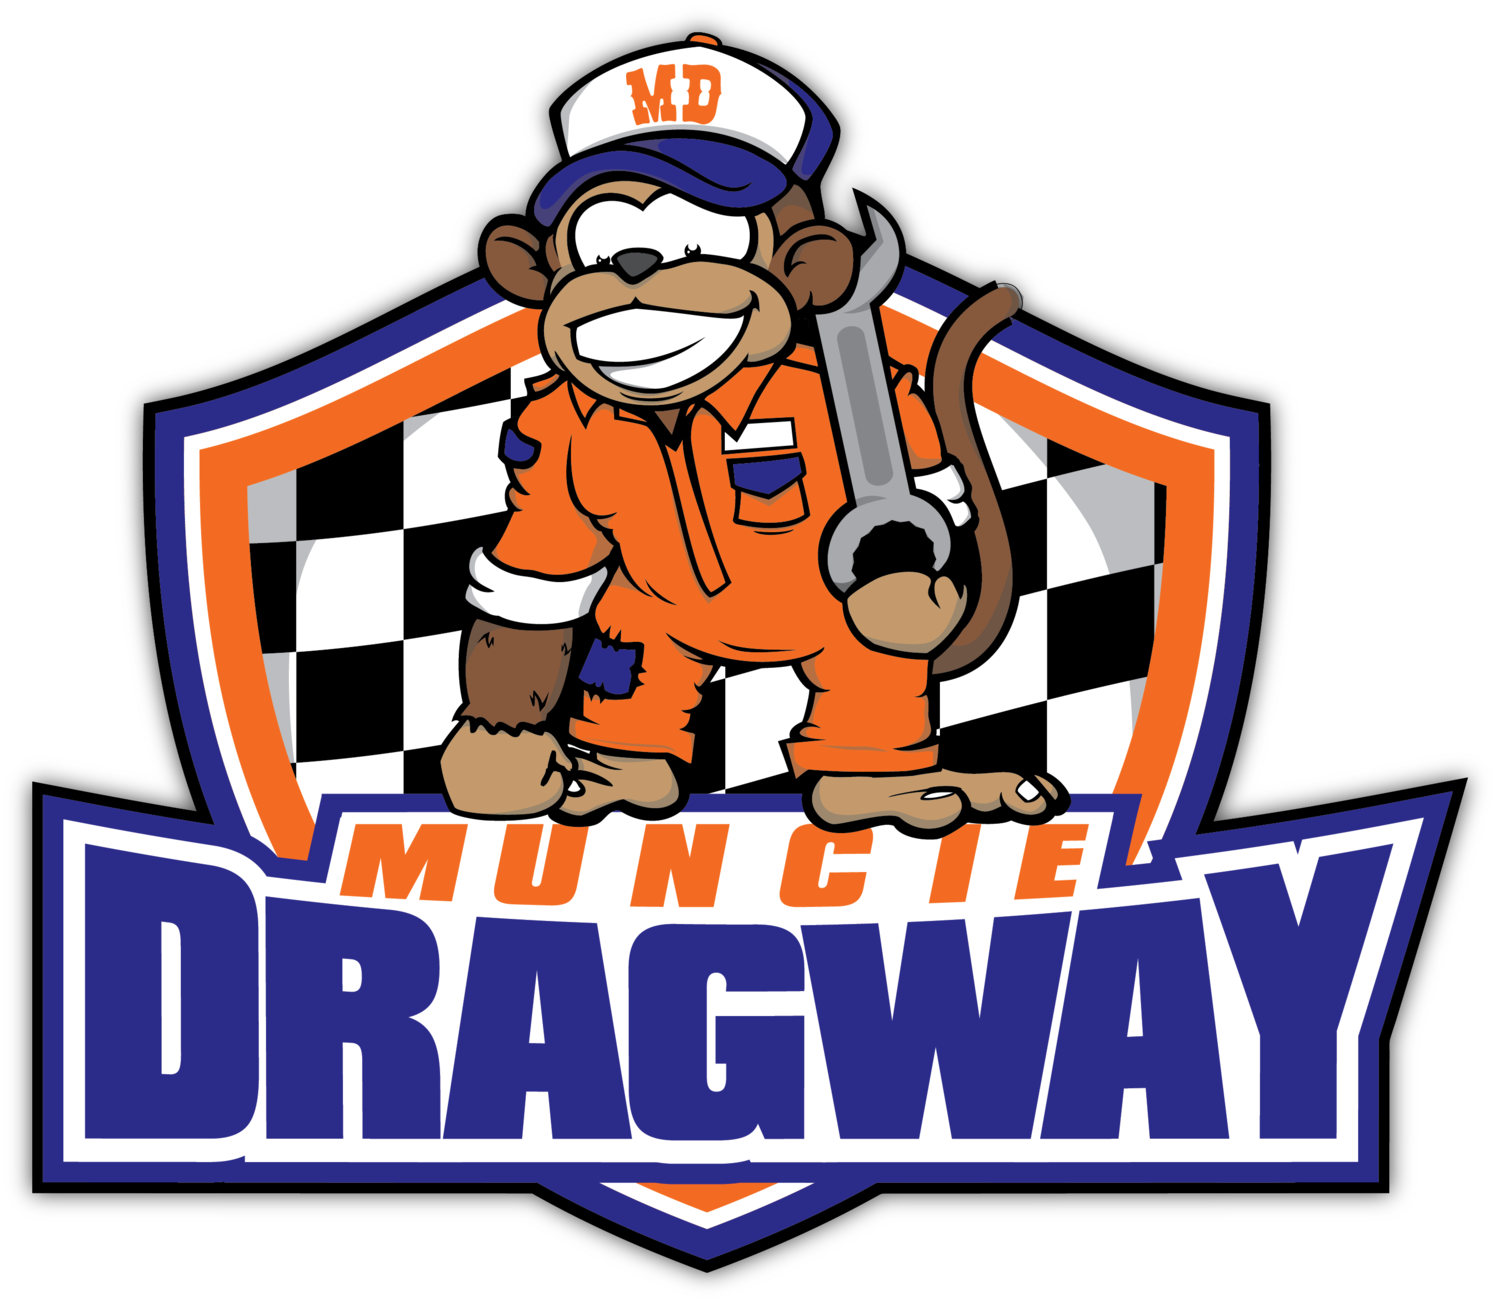 Muncie Dragway's logo